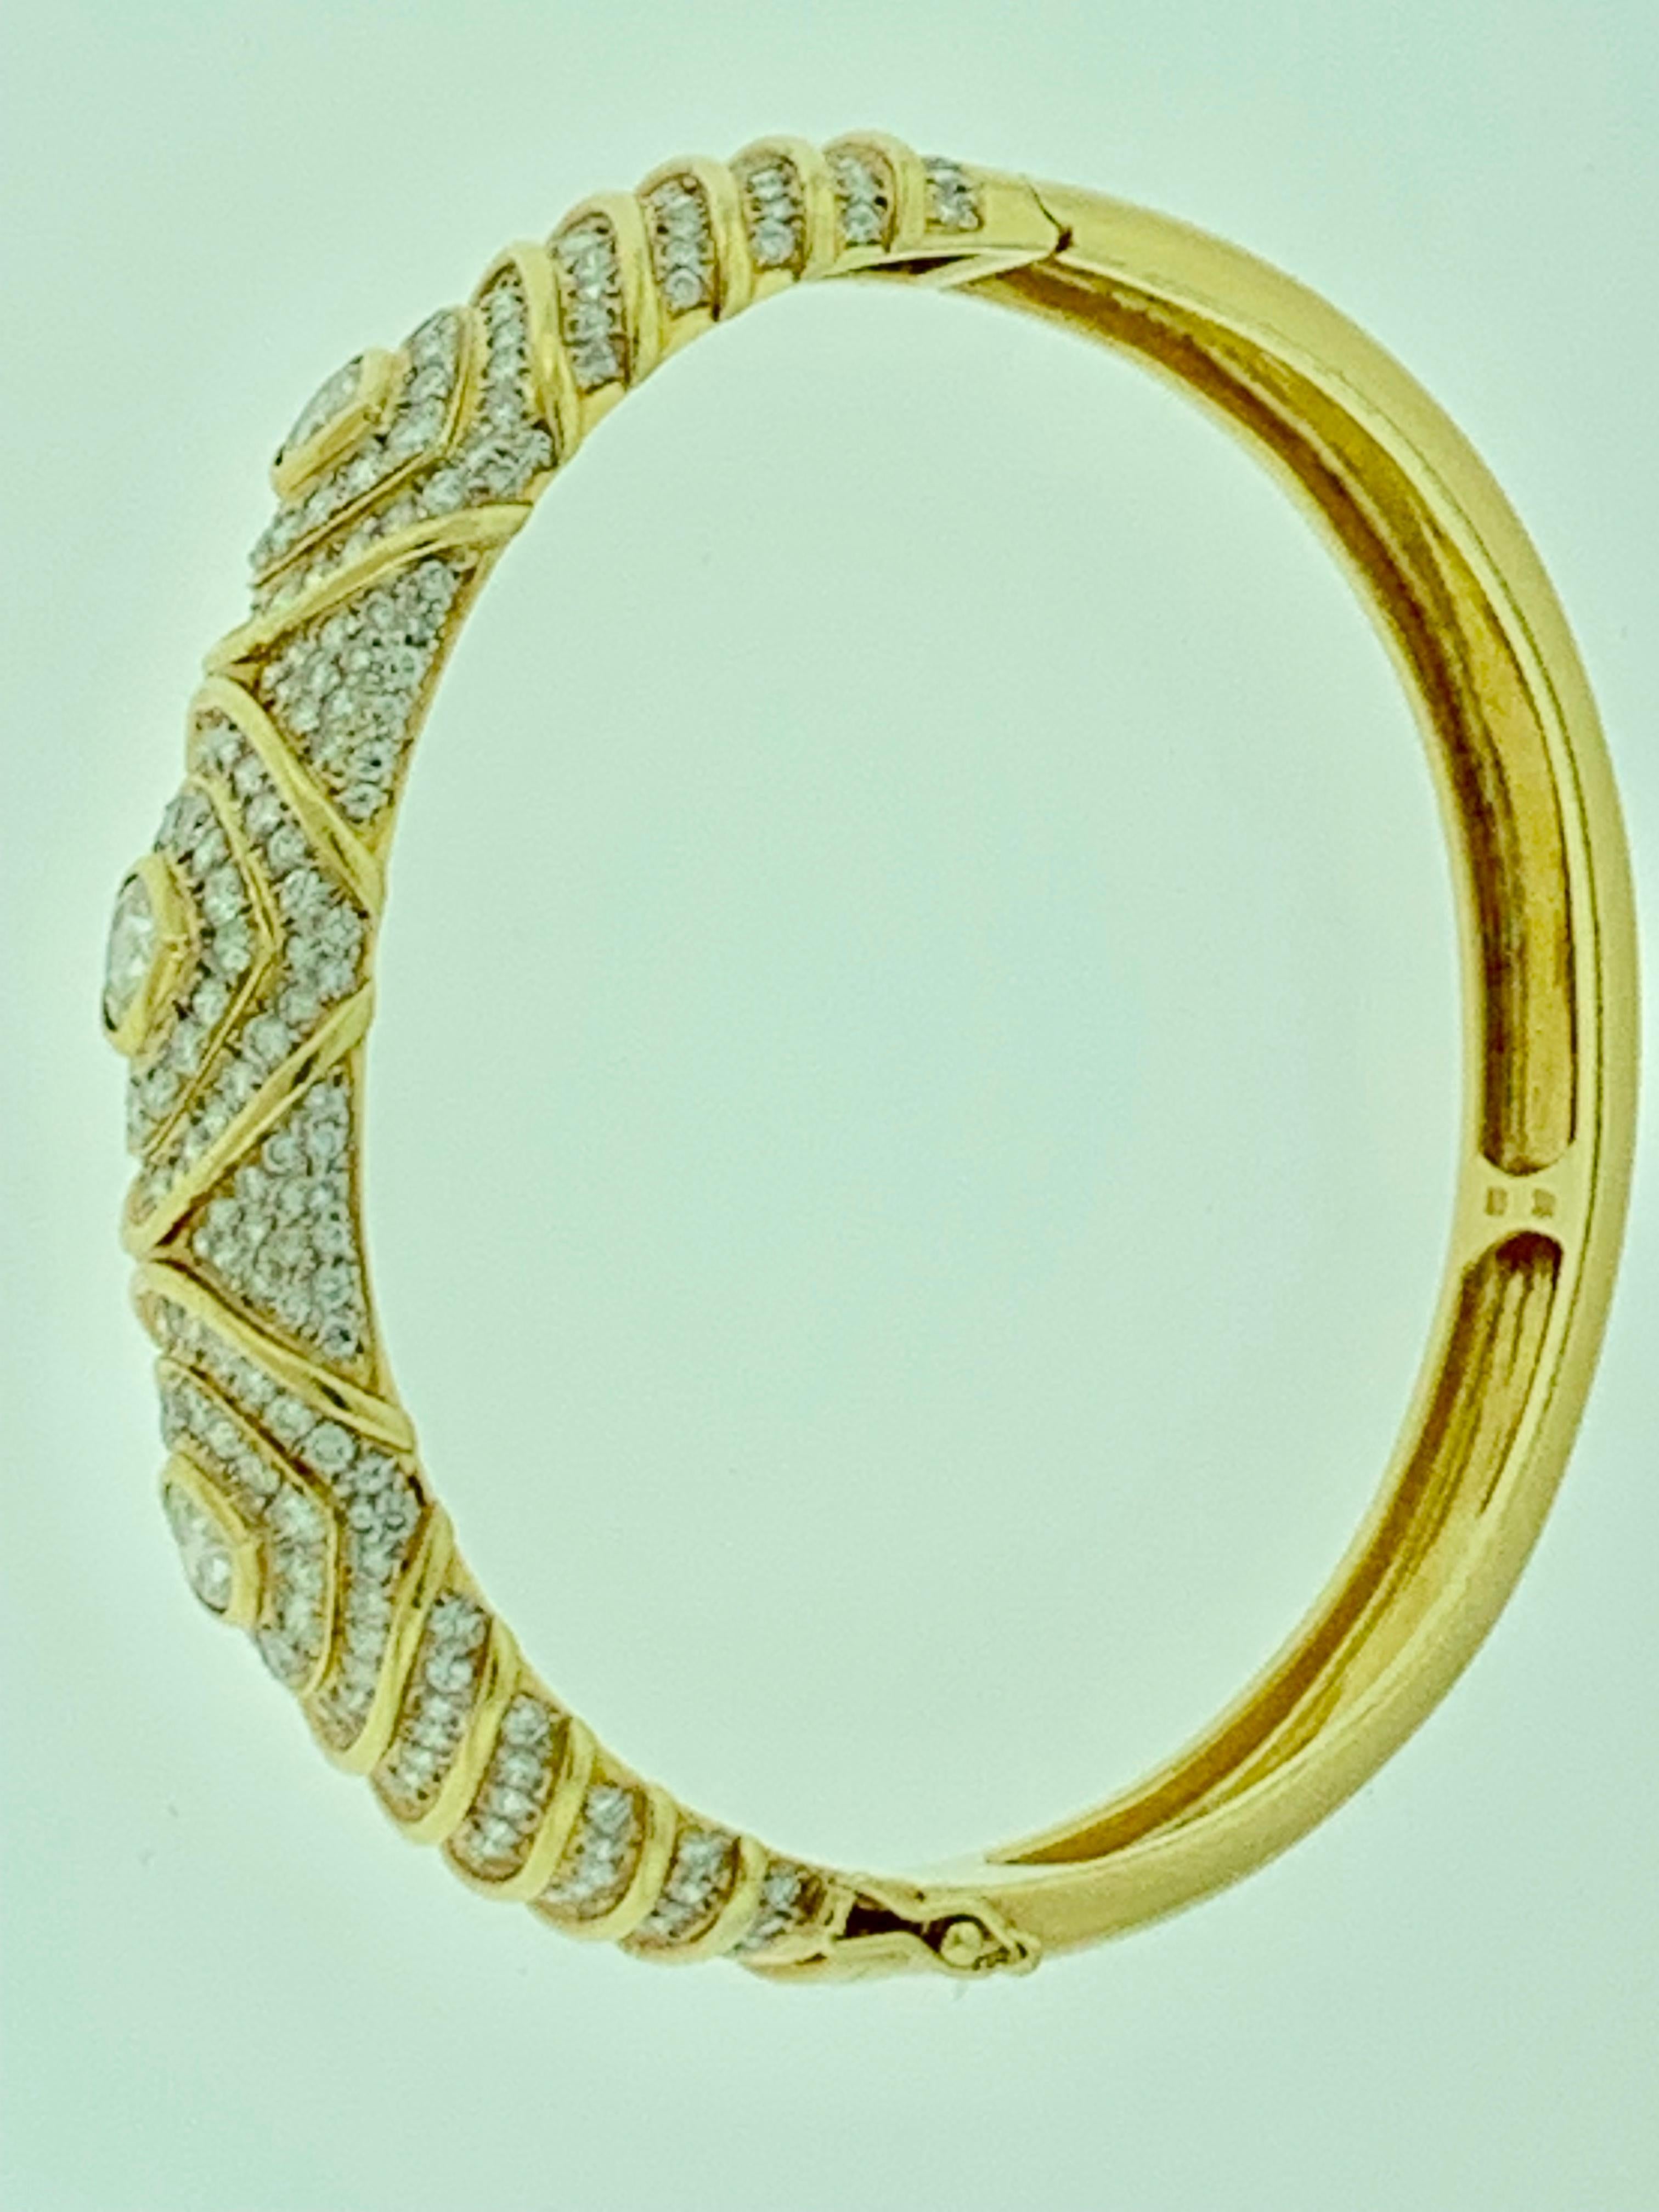 Women's 10 Carat Diamond Heart Shape Bangle /Bracelet in 18 Karat Yellow Gold 48 Grams